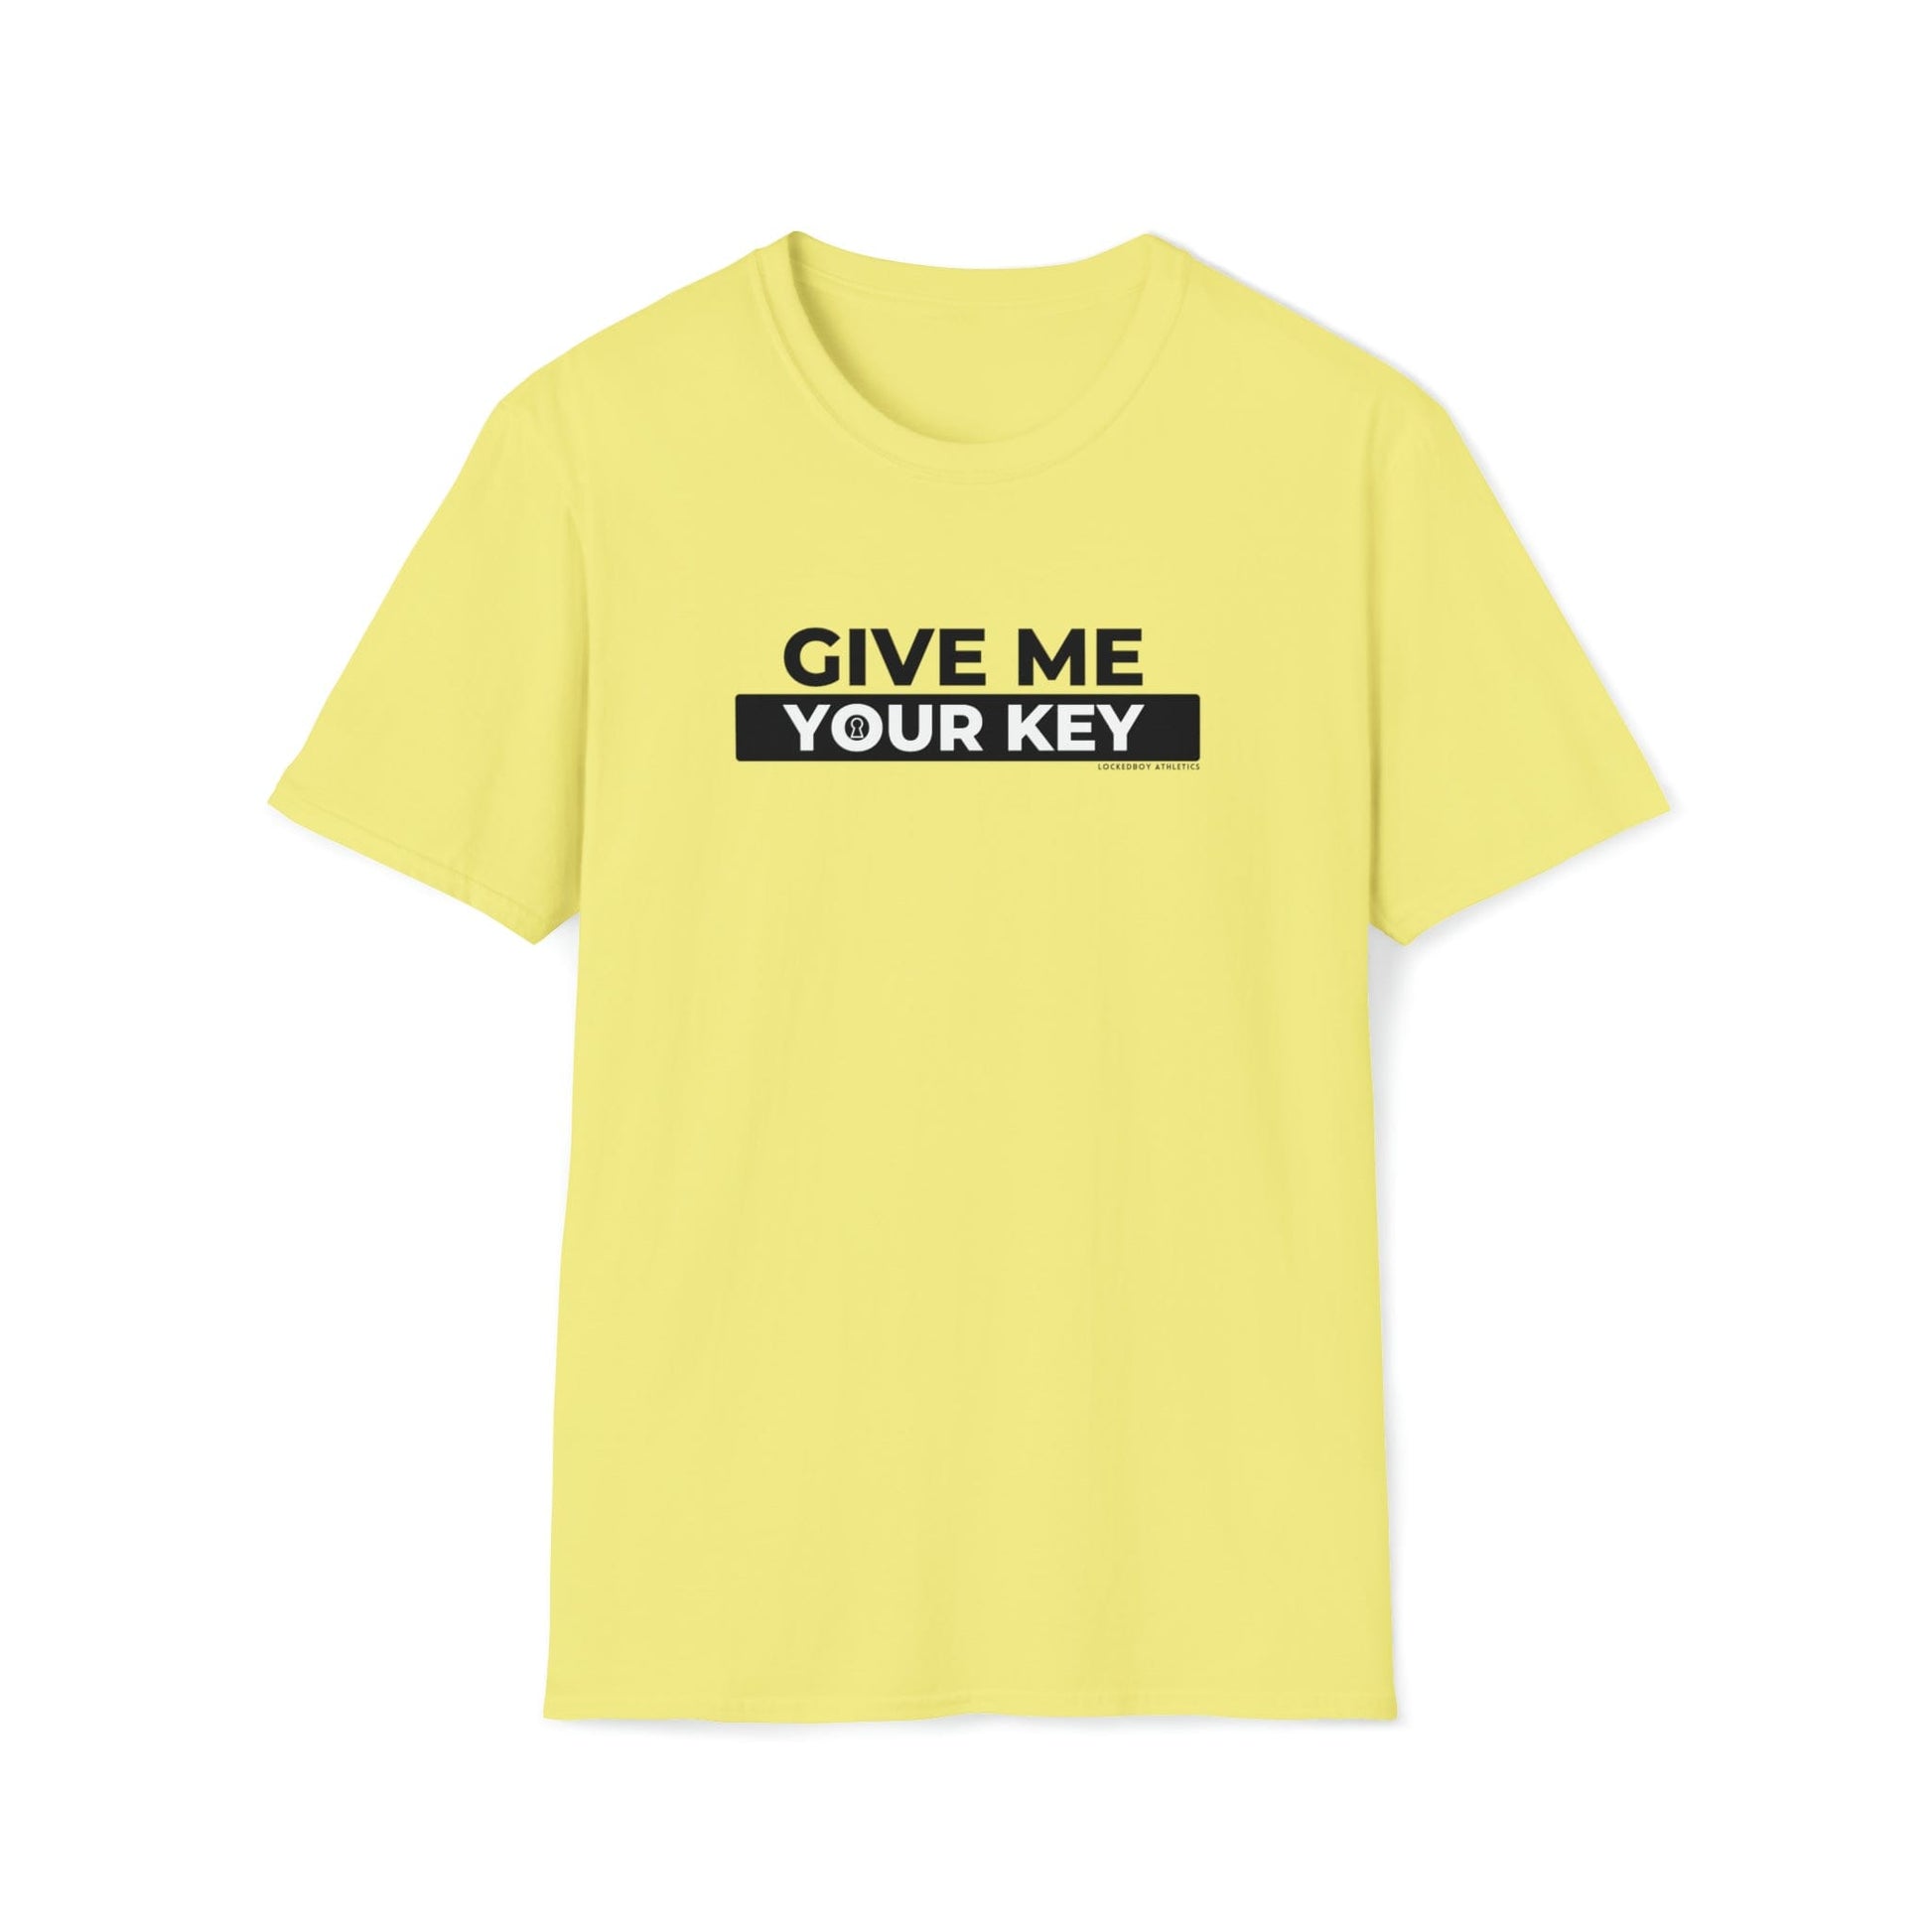 T-Shirt Cornsilk / S Give Me Your Key - Chastity Shirts by LockedBoy Athletics LEATHERDADDY BATOR